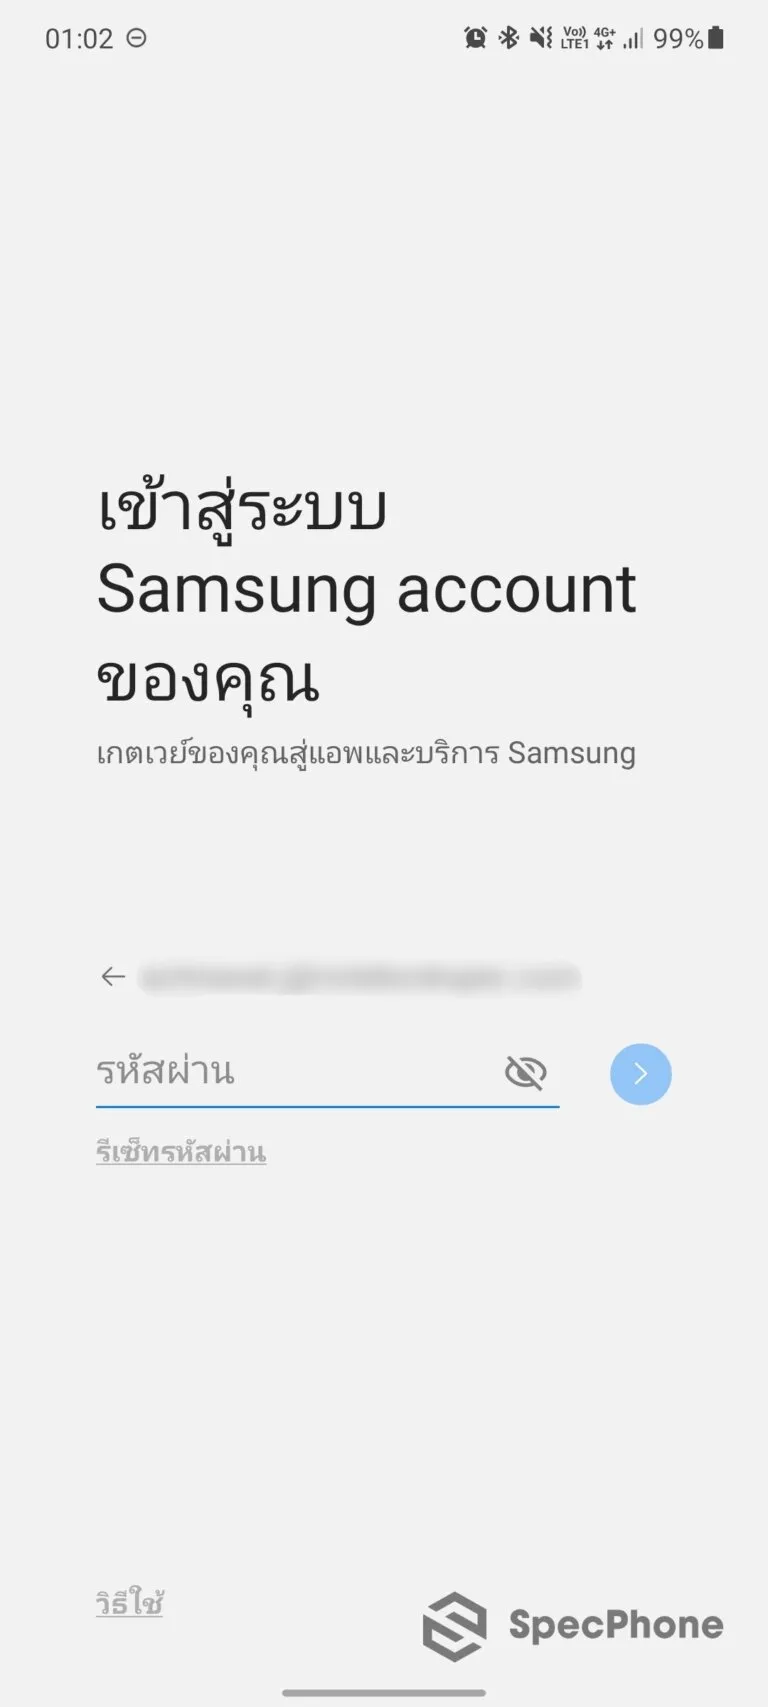 Samsung Account 07 1